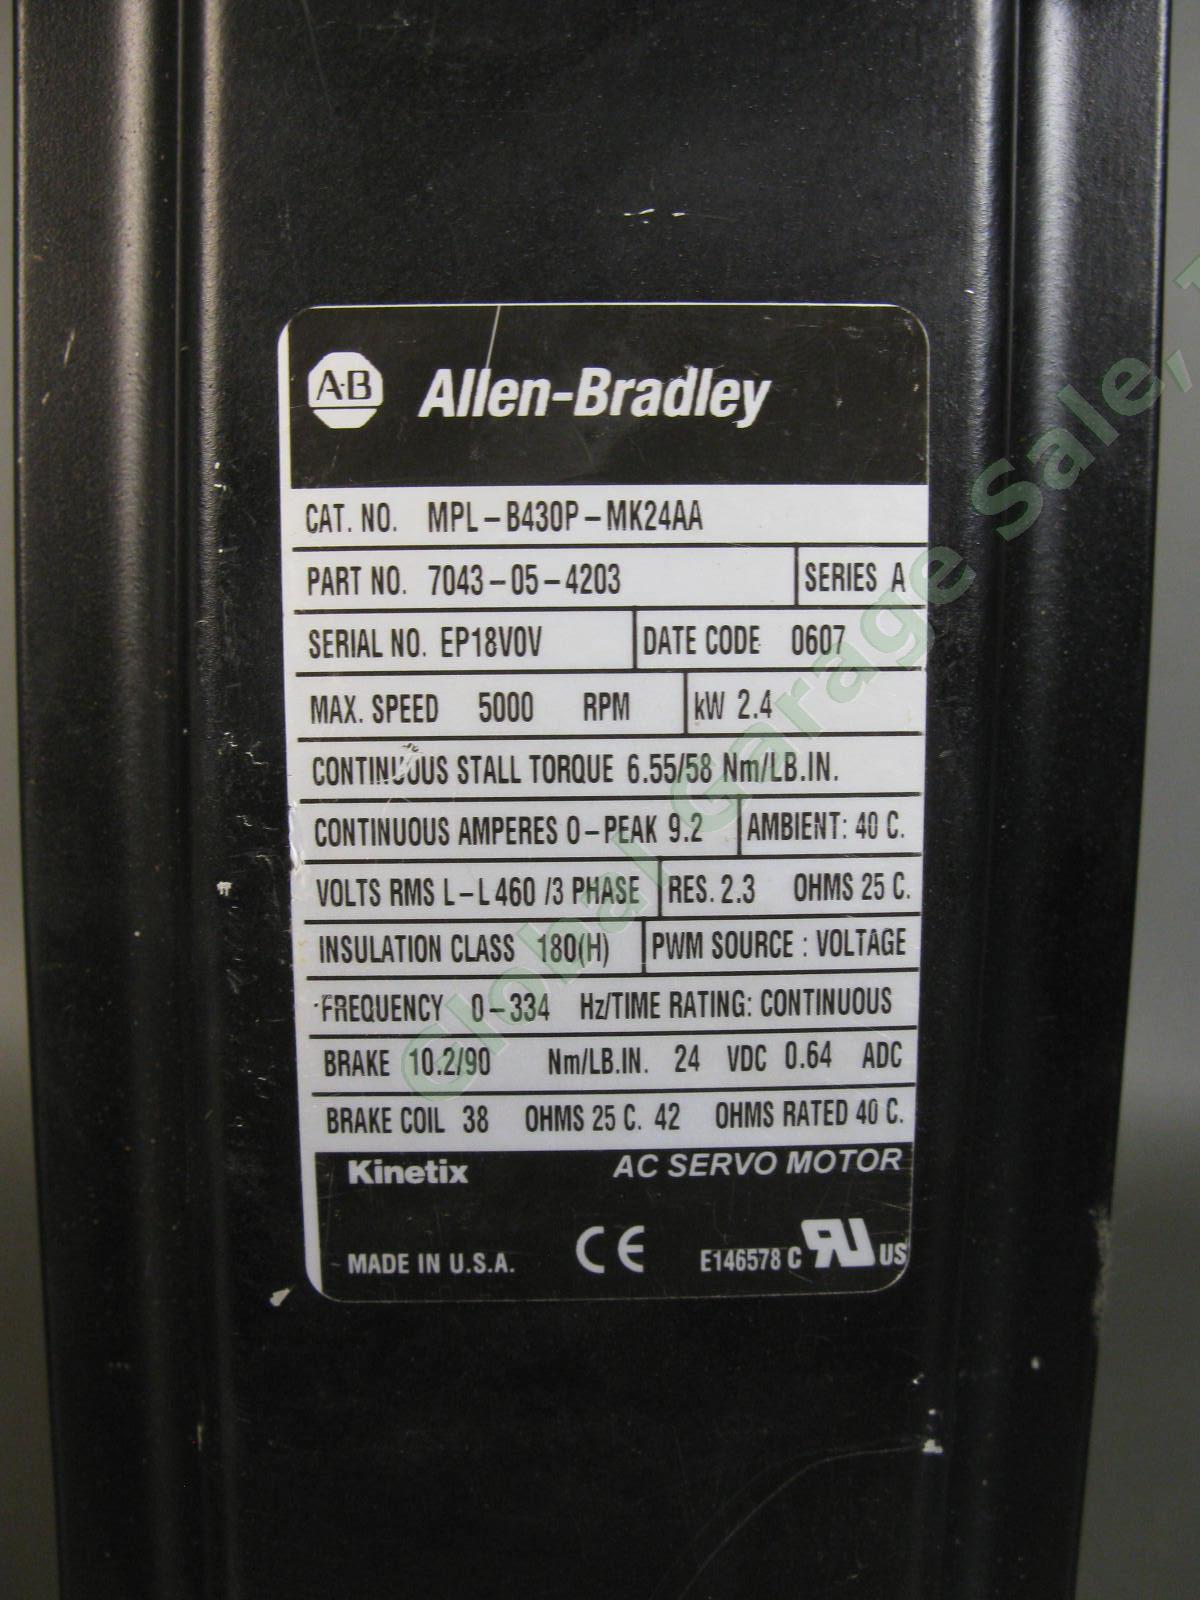 Allen Bradley MPL-B430P-MK24AA Brushless Low Inertia Servo Motor 460V 5000RPM 1